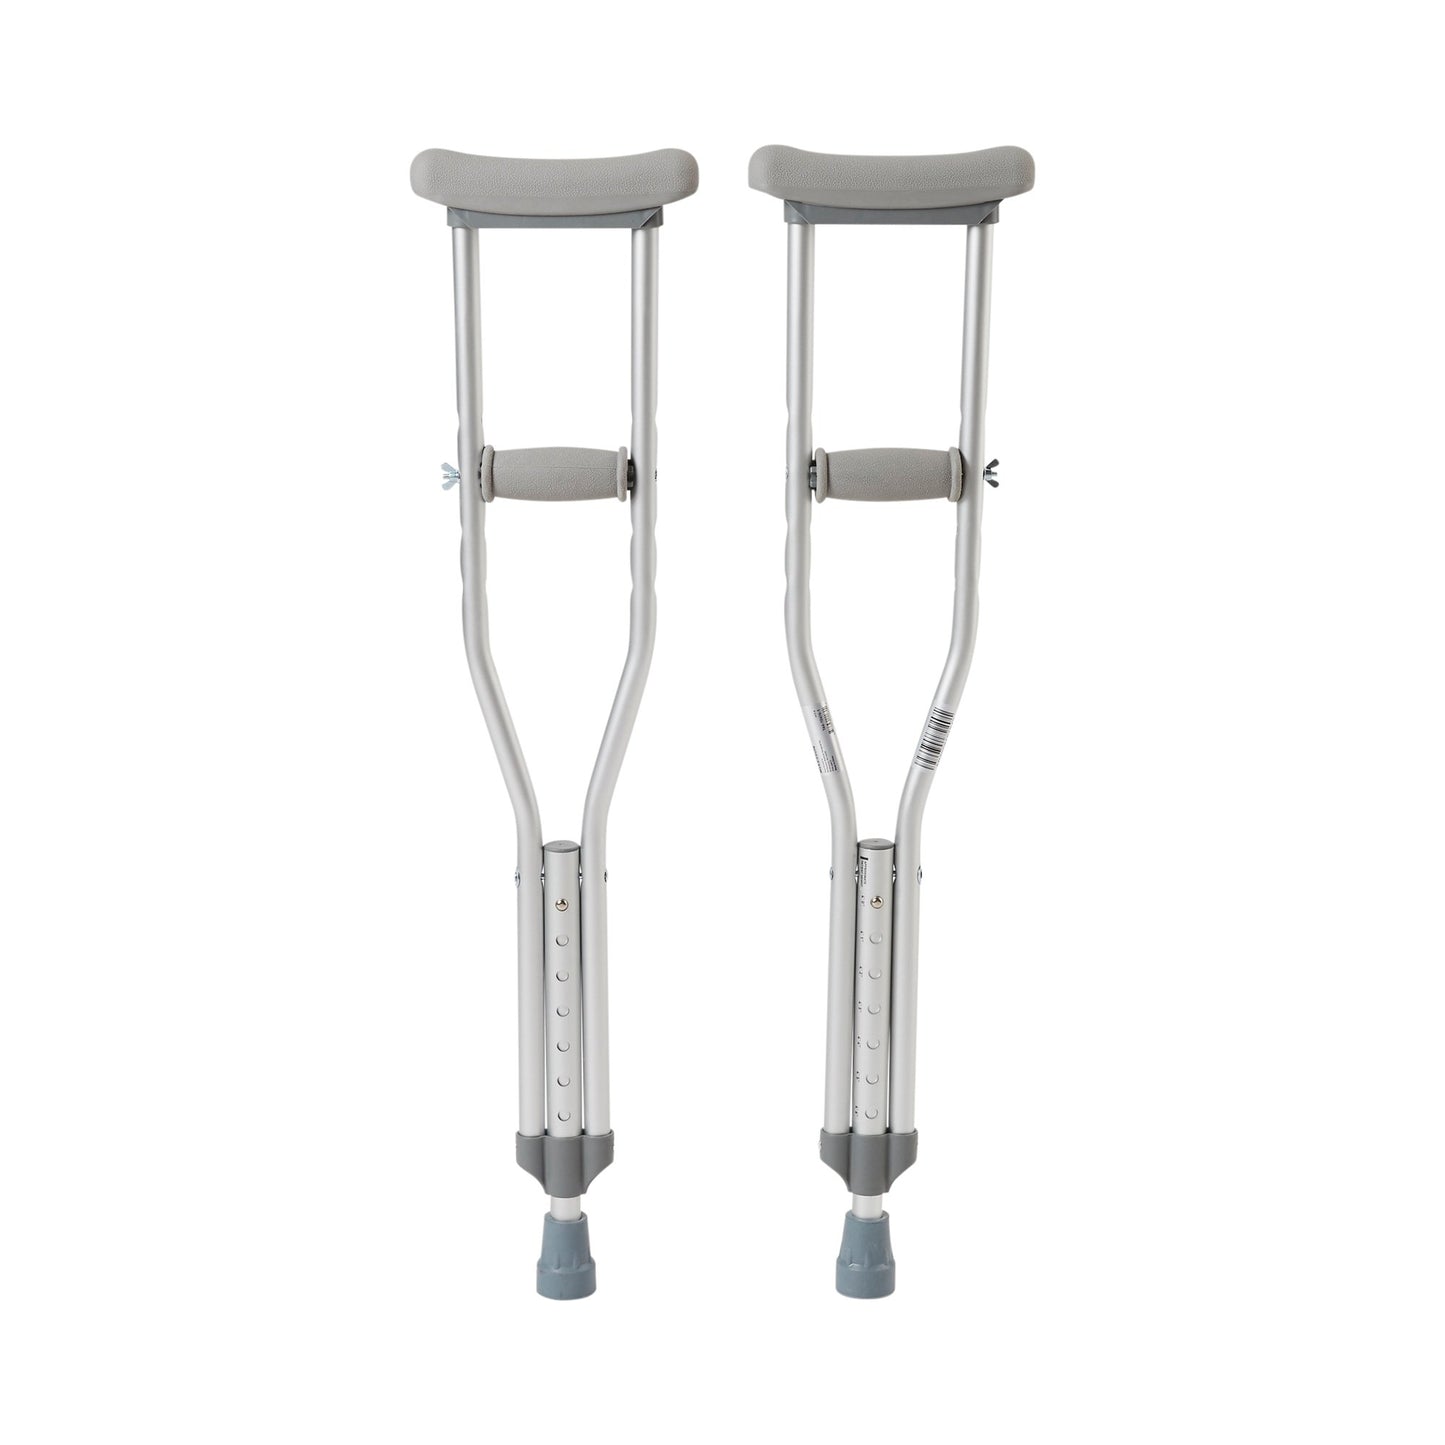 McKesson Child Underarm Crutches, 4 ft. - 4 ft. 6 in.